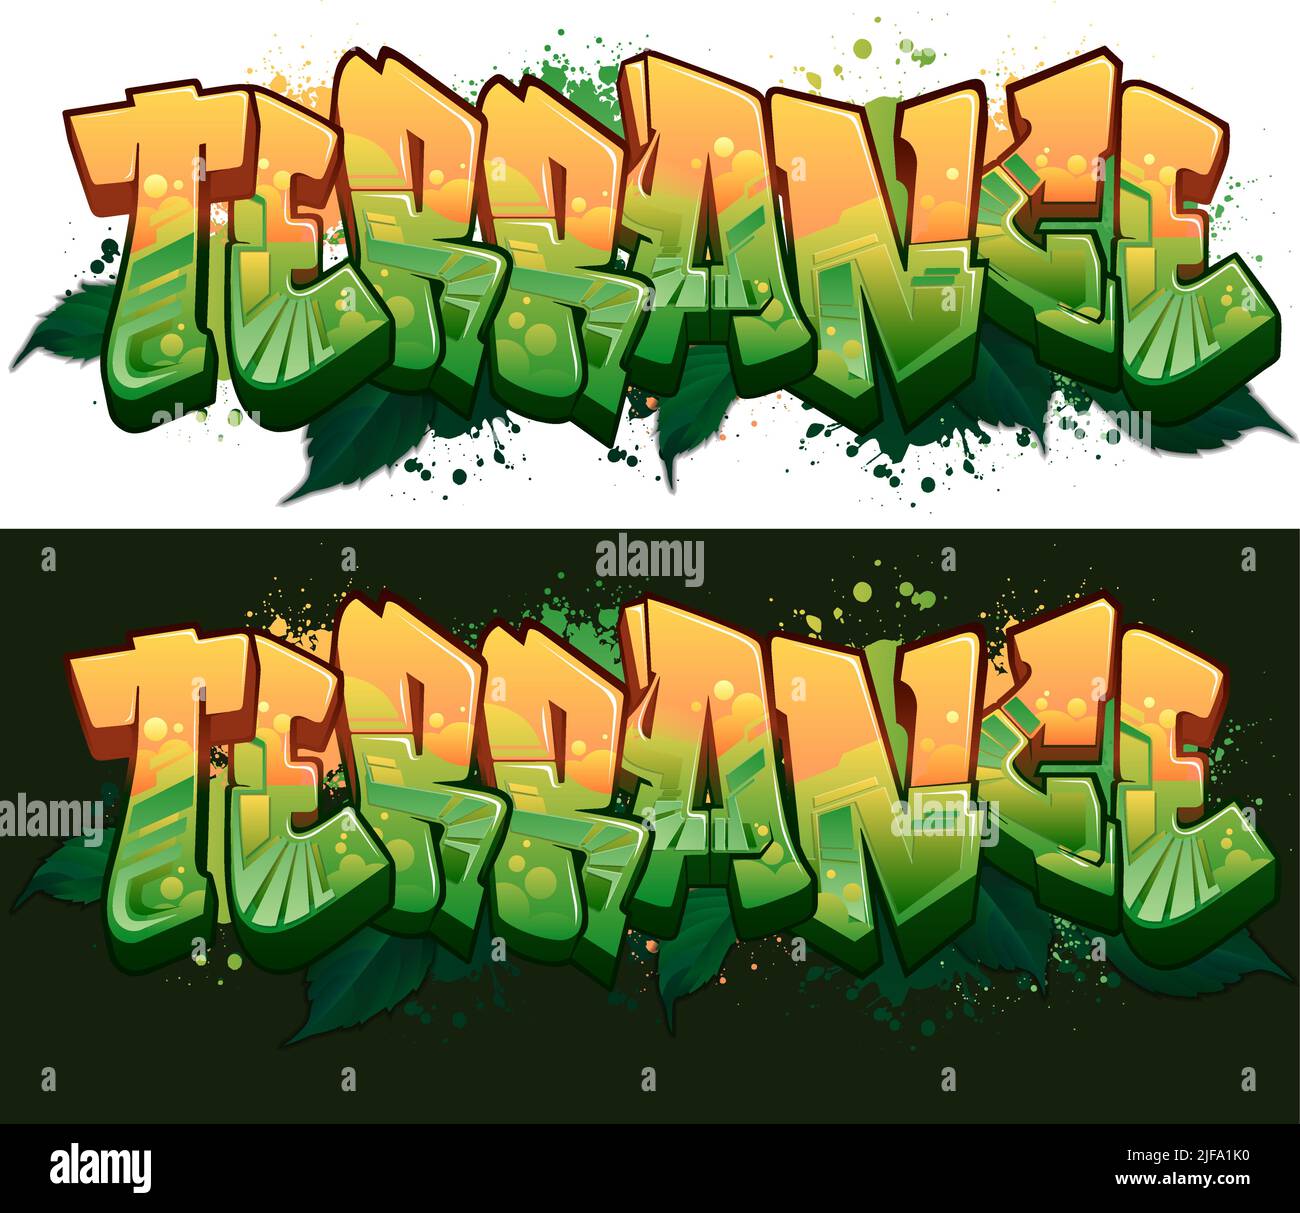 Graffiti Styled Urban Street Art Tagging Design - Terrance Stock Vector